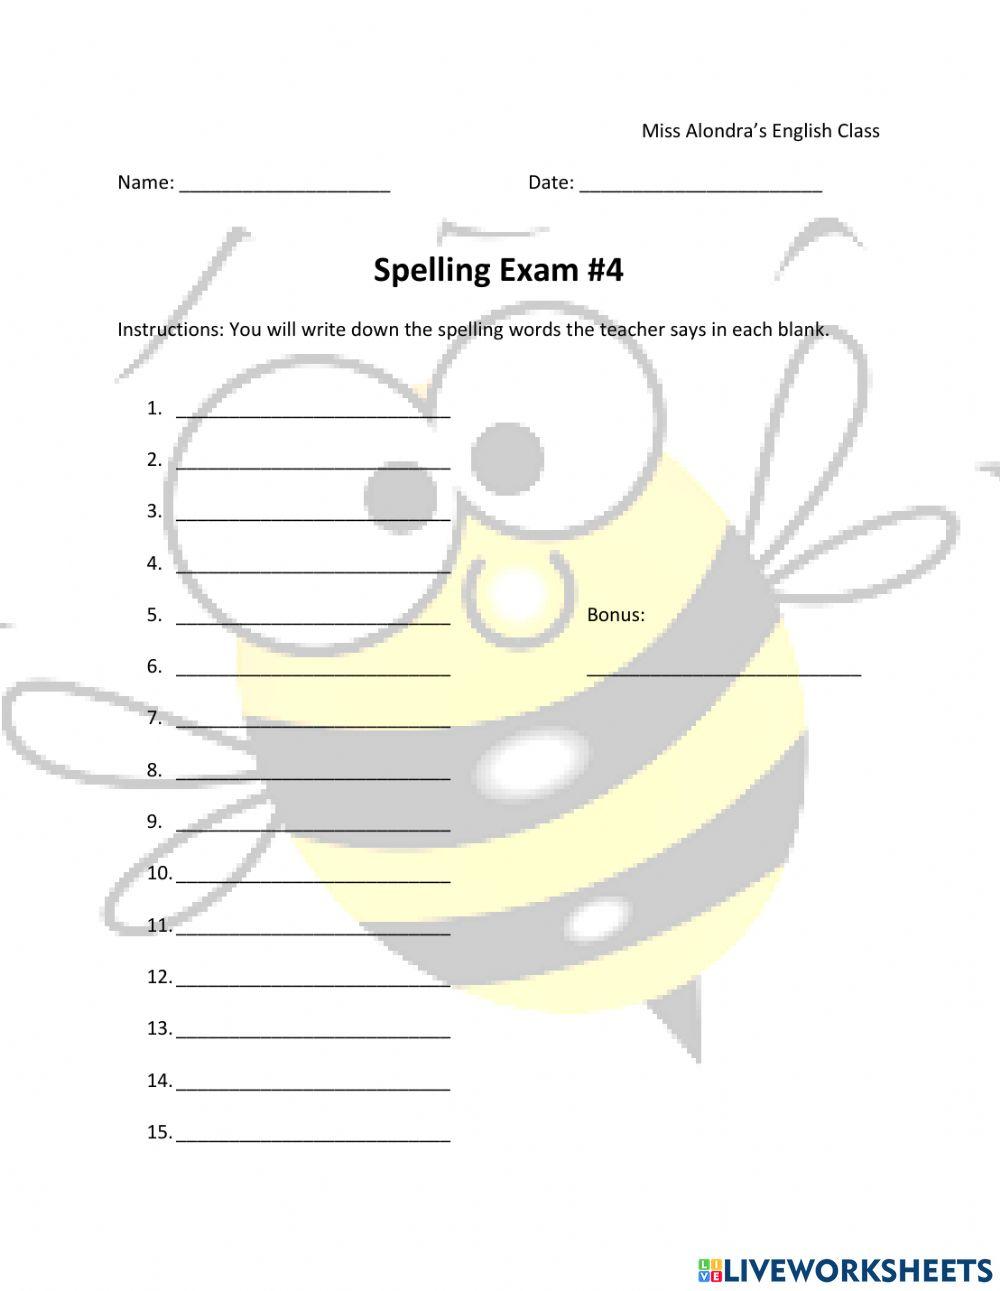 Spelling Exam -4